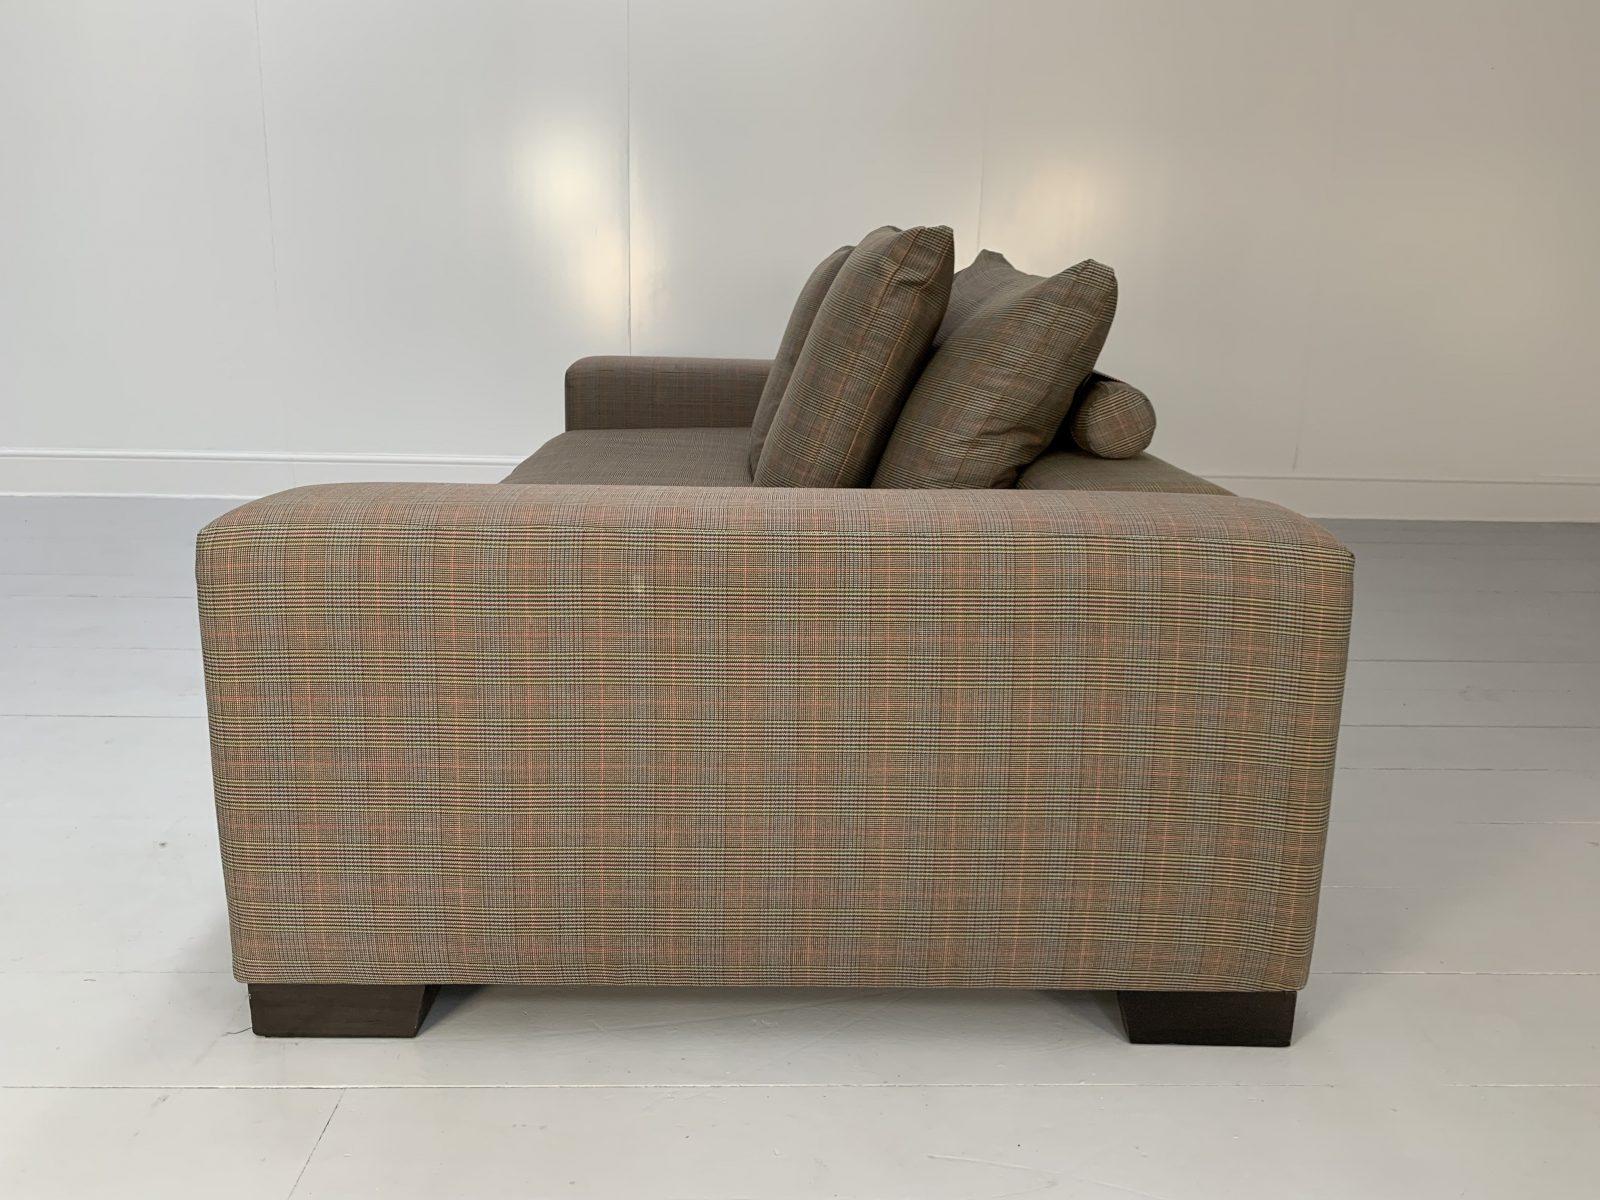 Contemporary George Smith “Square” 4-Seat Sofa – In Ralph Lauren “Glen Plaid” Check For Sale